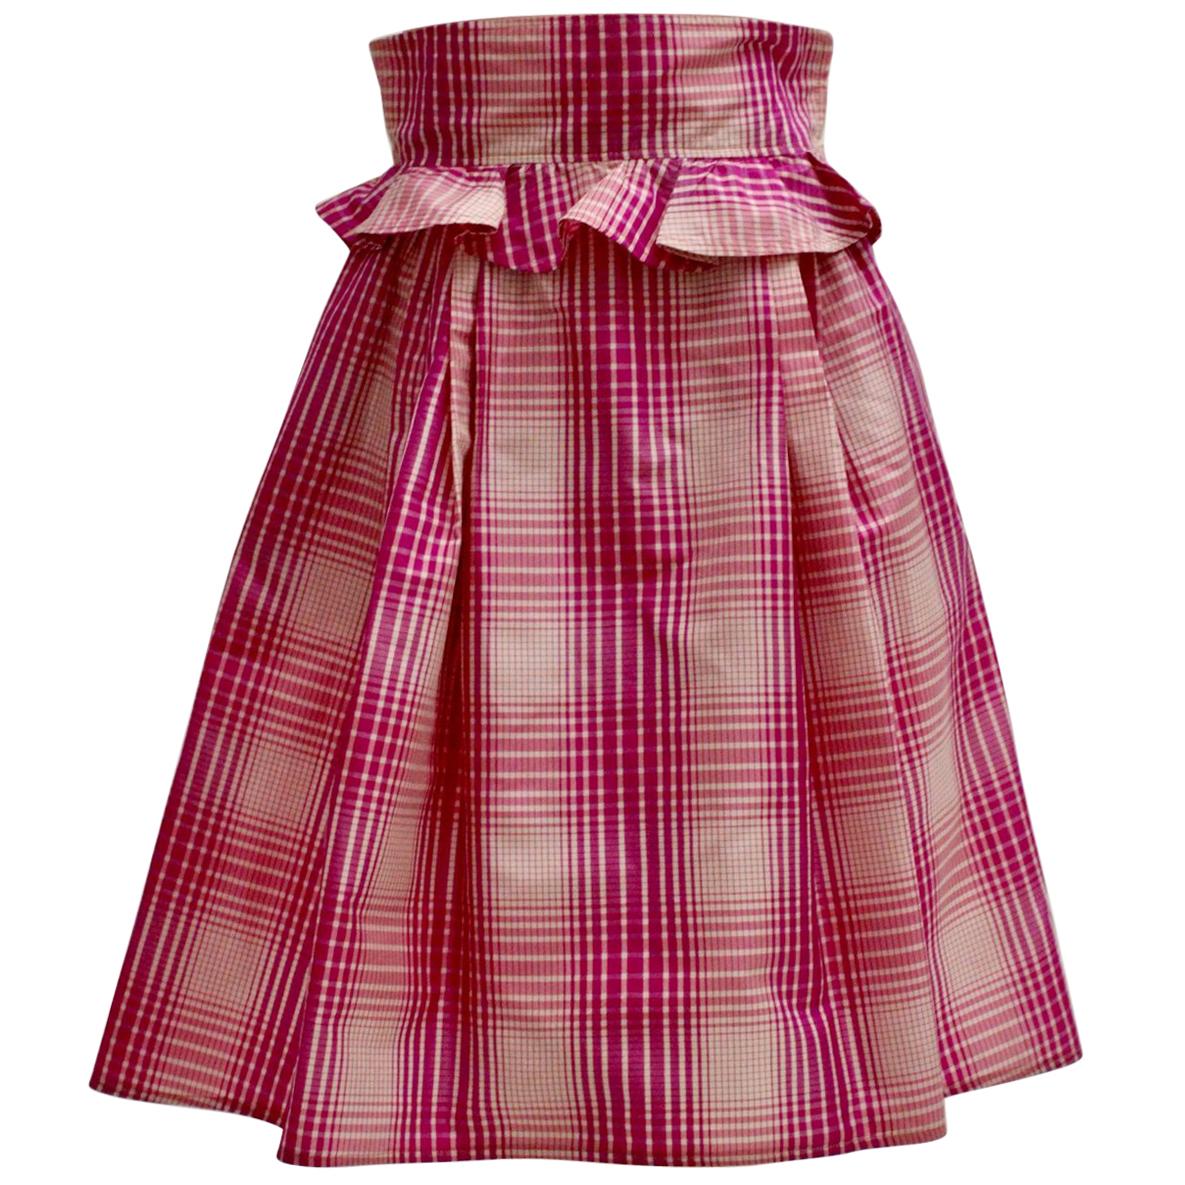 Silk Pink White Checker Vintage High Waist Skirt by Emanuel Ungaro 1980s Paris For Sale